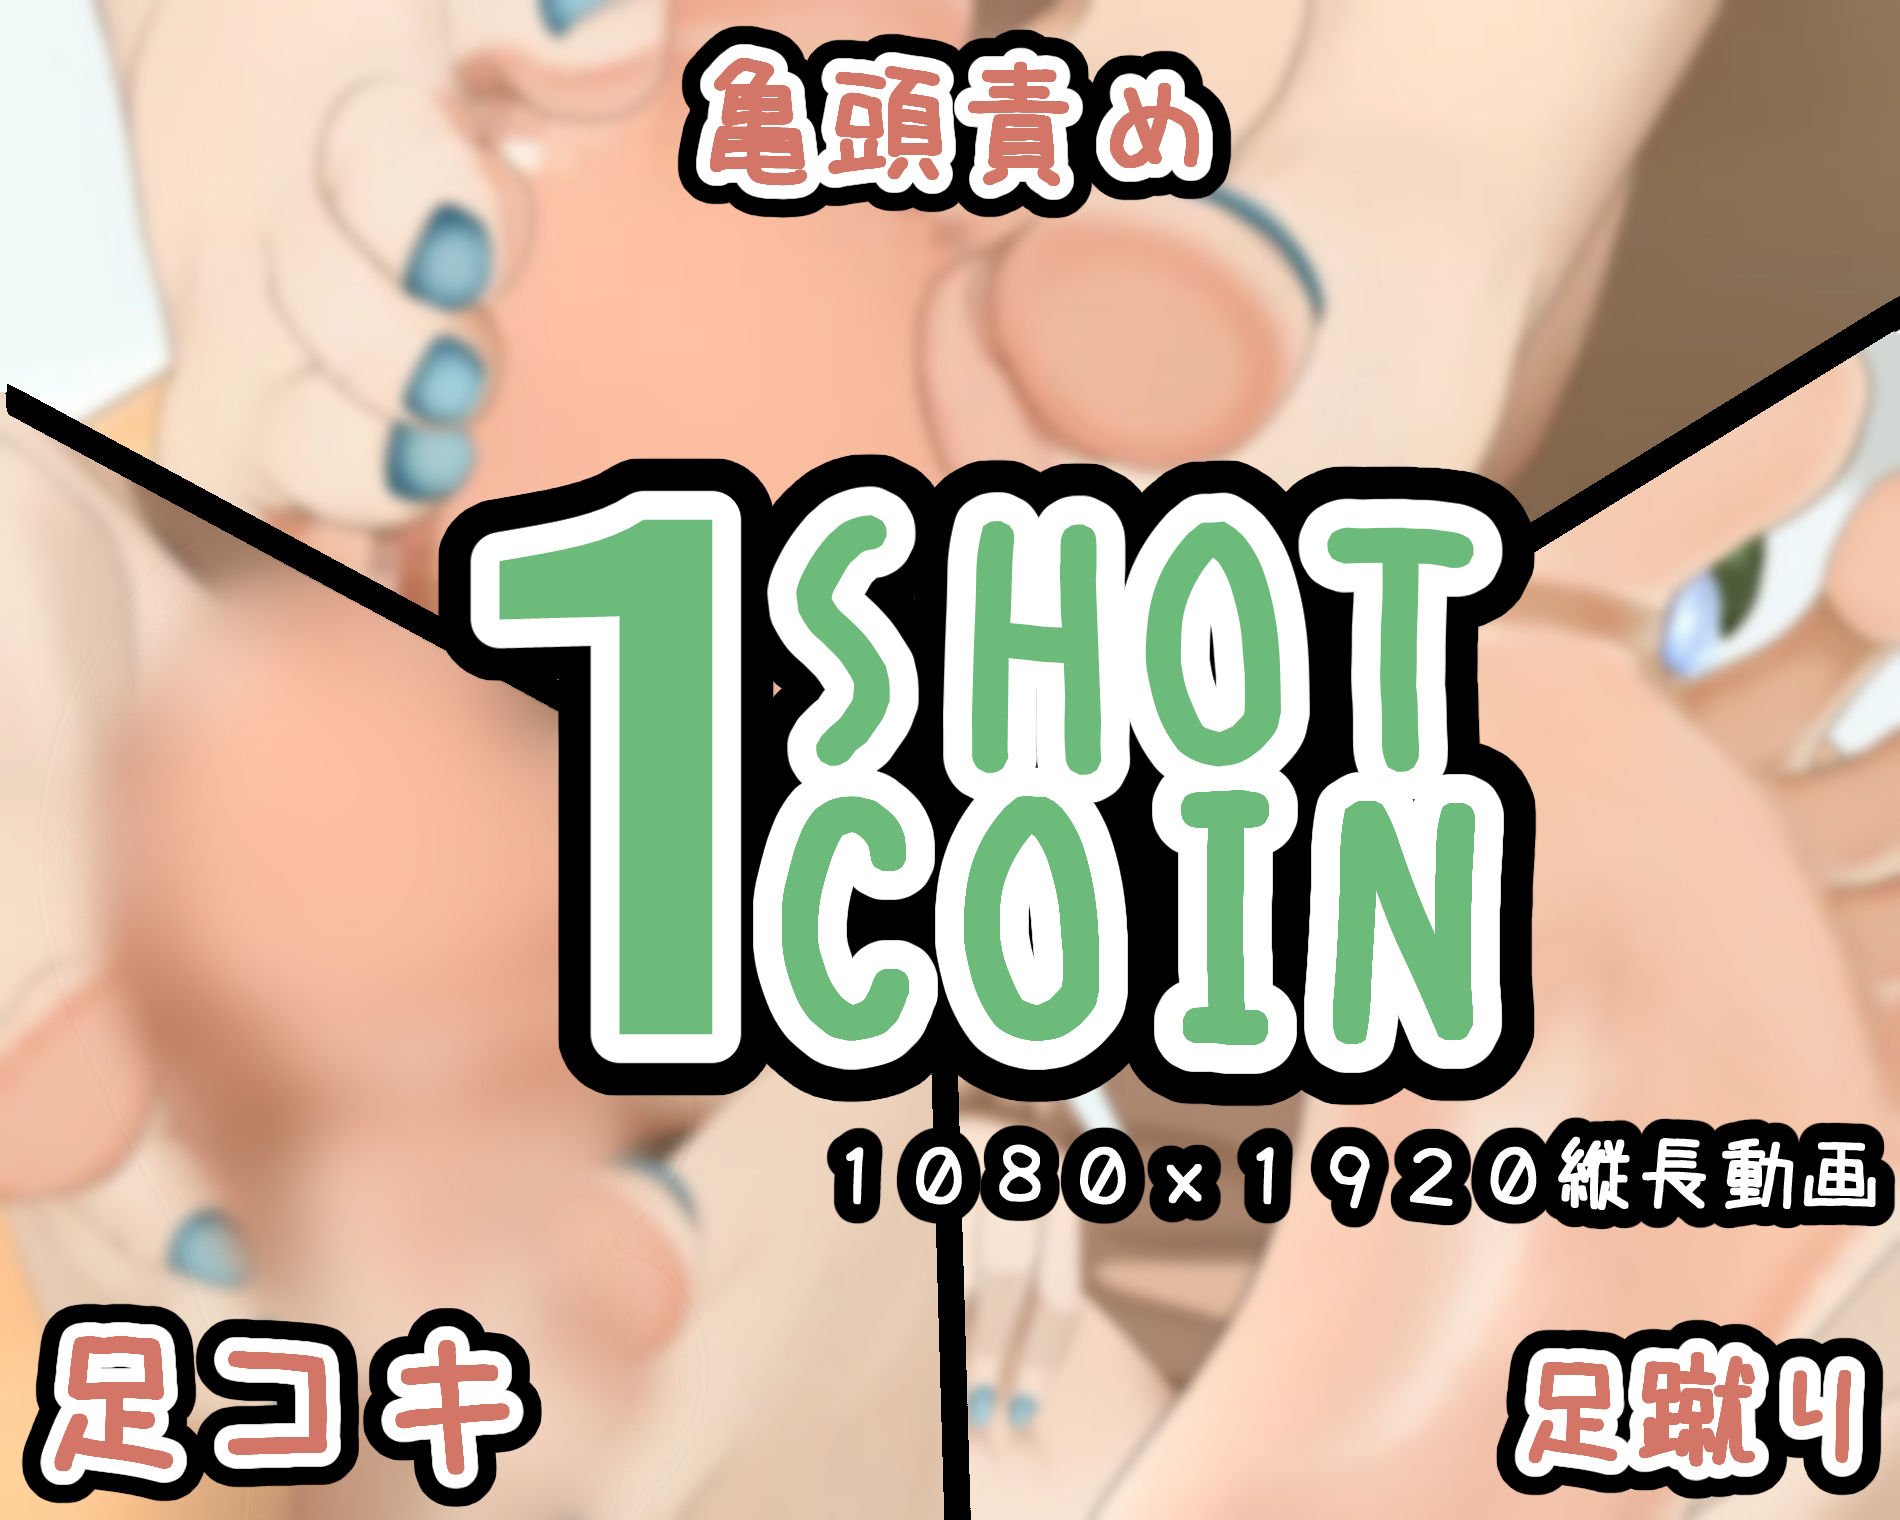 1SHOT 1COIN〜Vol.6〜足フェチの裸足フェチによる足フェチ向けの動画_1